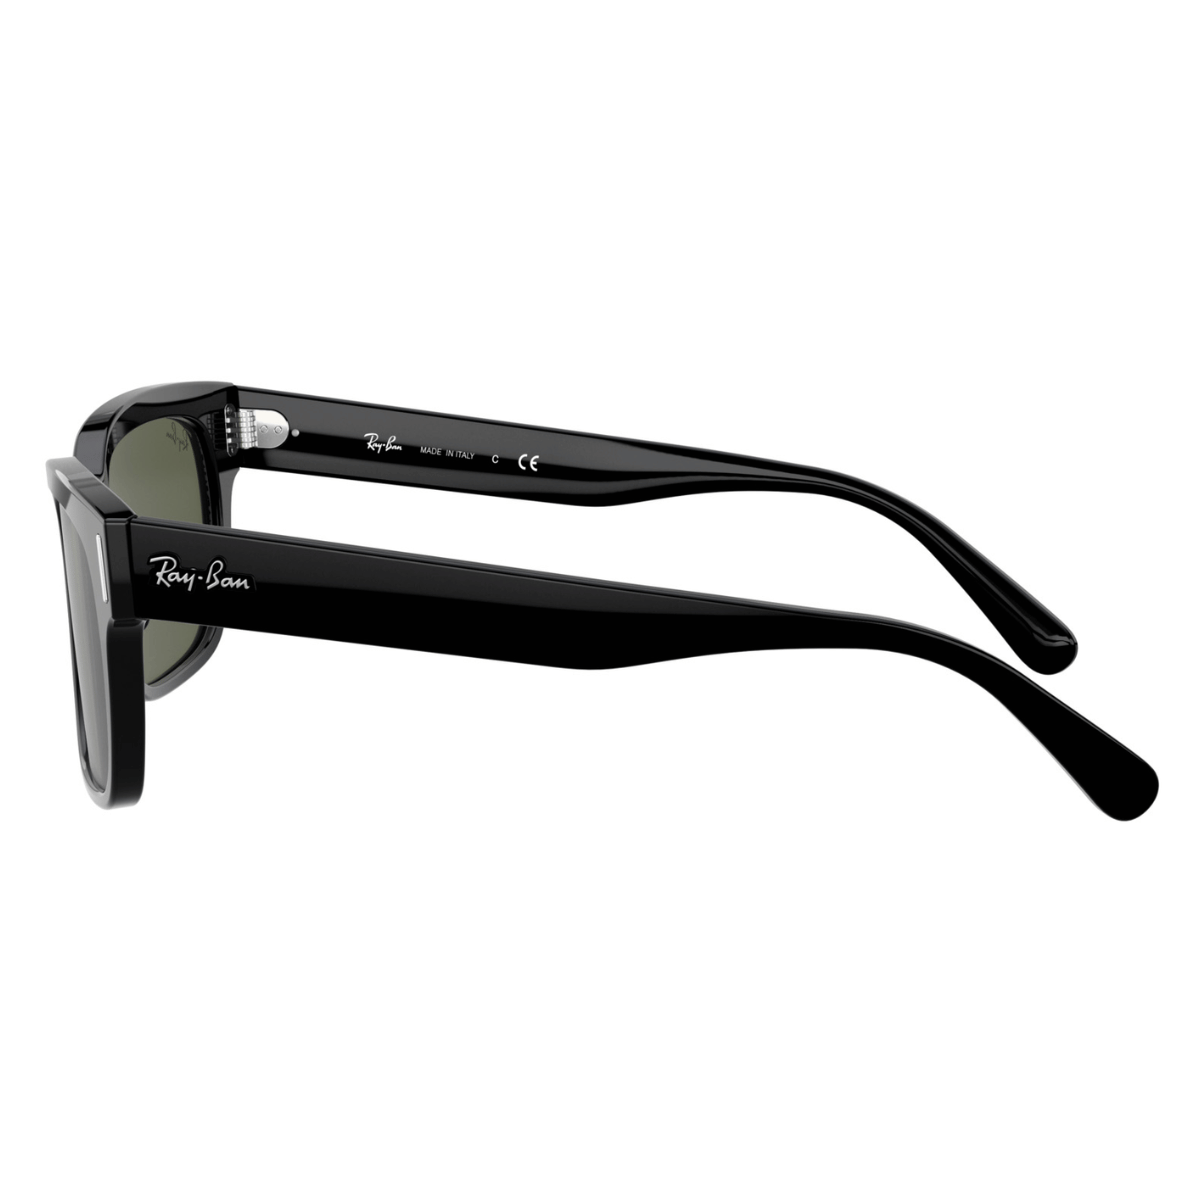 "Elegant display of Ray-Ban's 2190 Jeffrey square sunglasses in shiny black, highlighting their unique design, at Optorium."